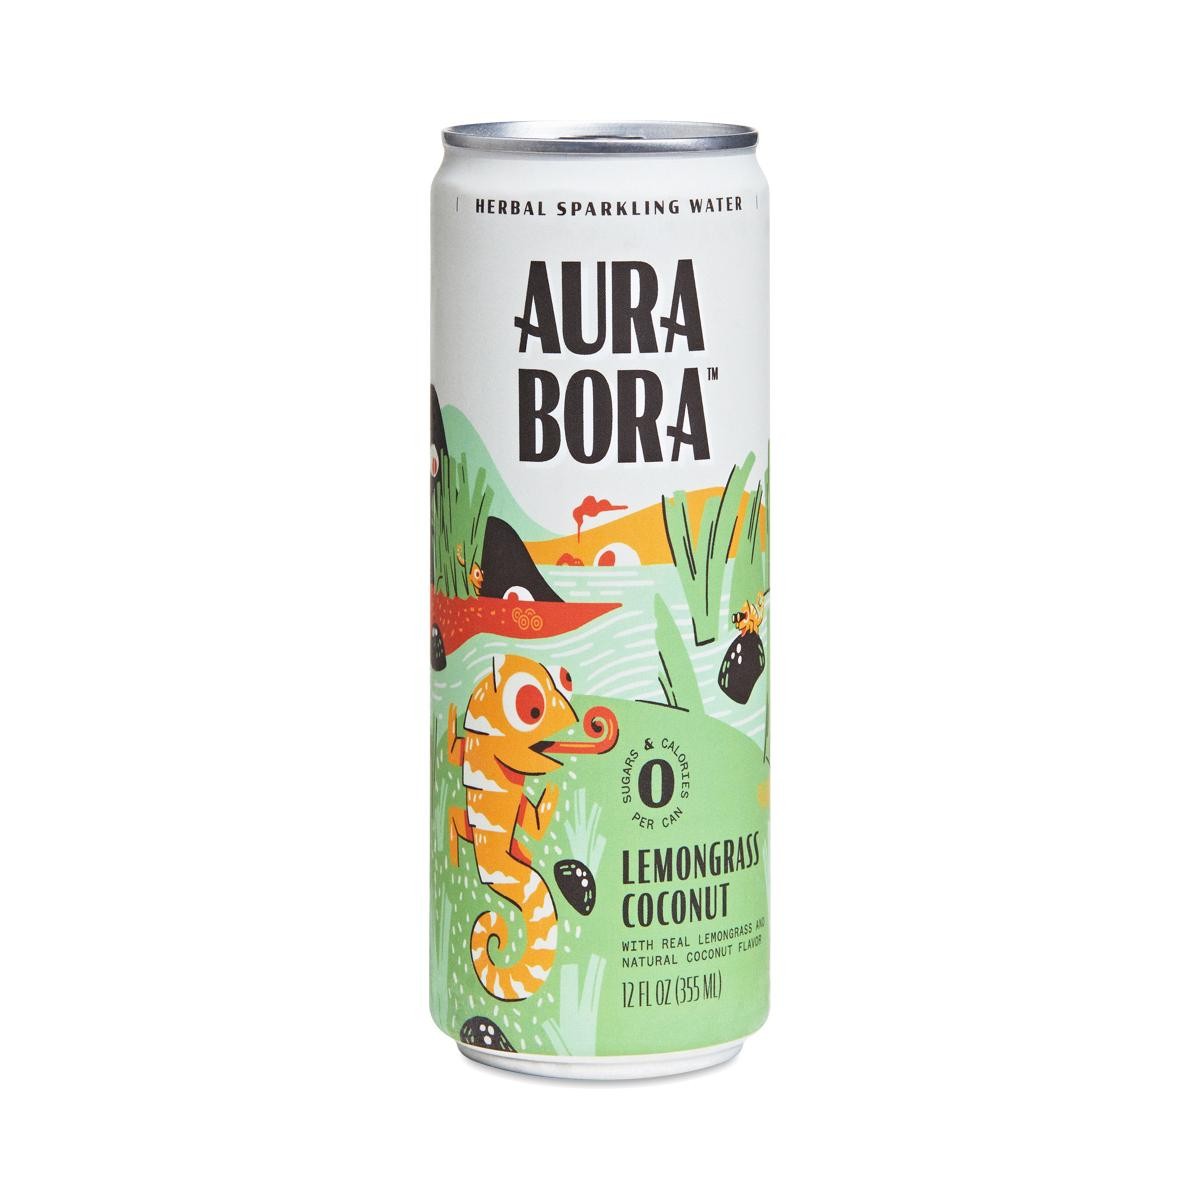 Aura Bora Lemongrass Coconut Herbal Sparkling Water 12oz Can